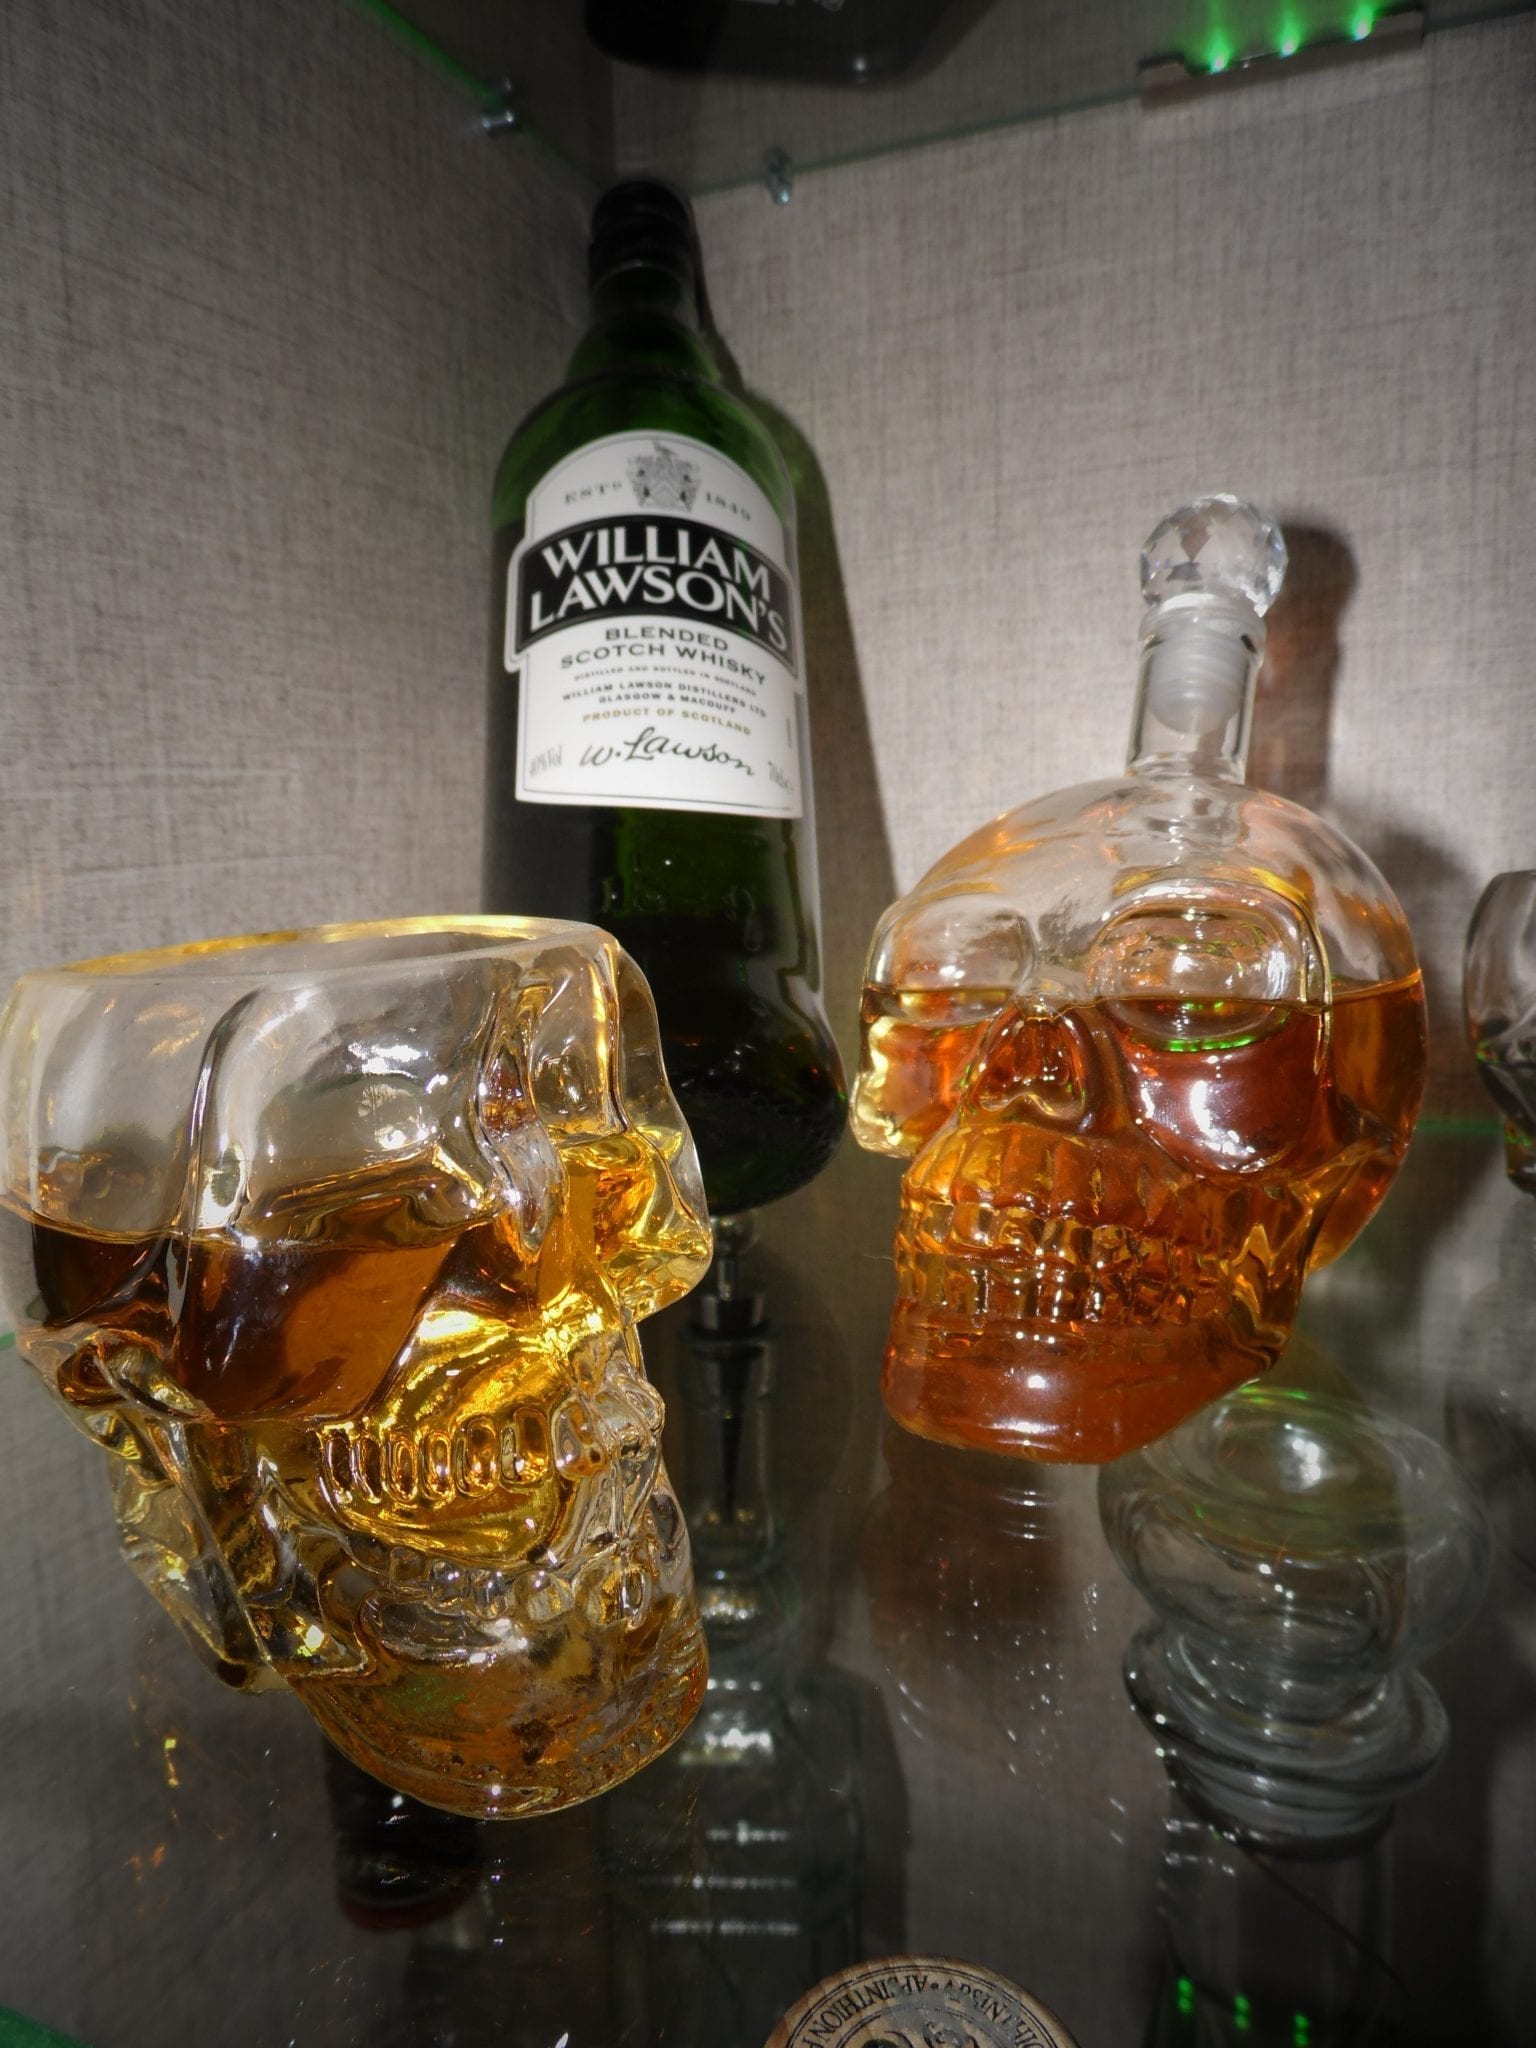 Scotch whiskey in skull-shaped glasses; image via Pxhere, CC0.